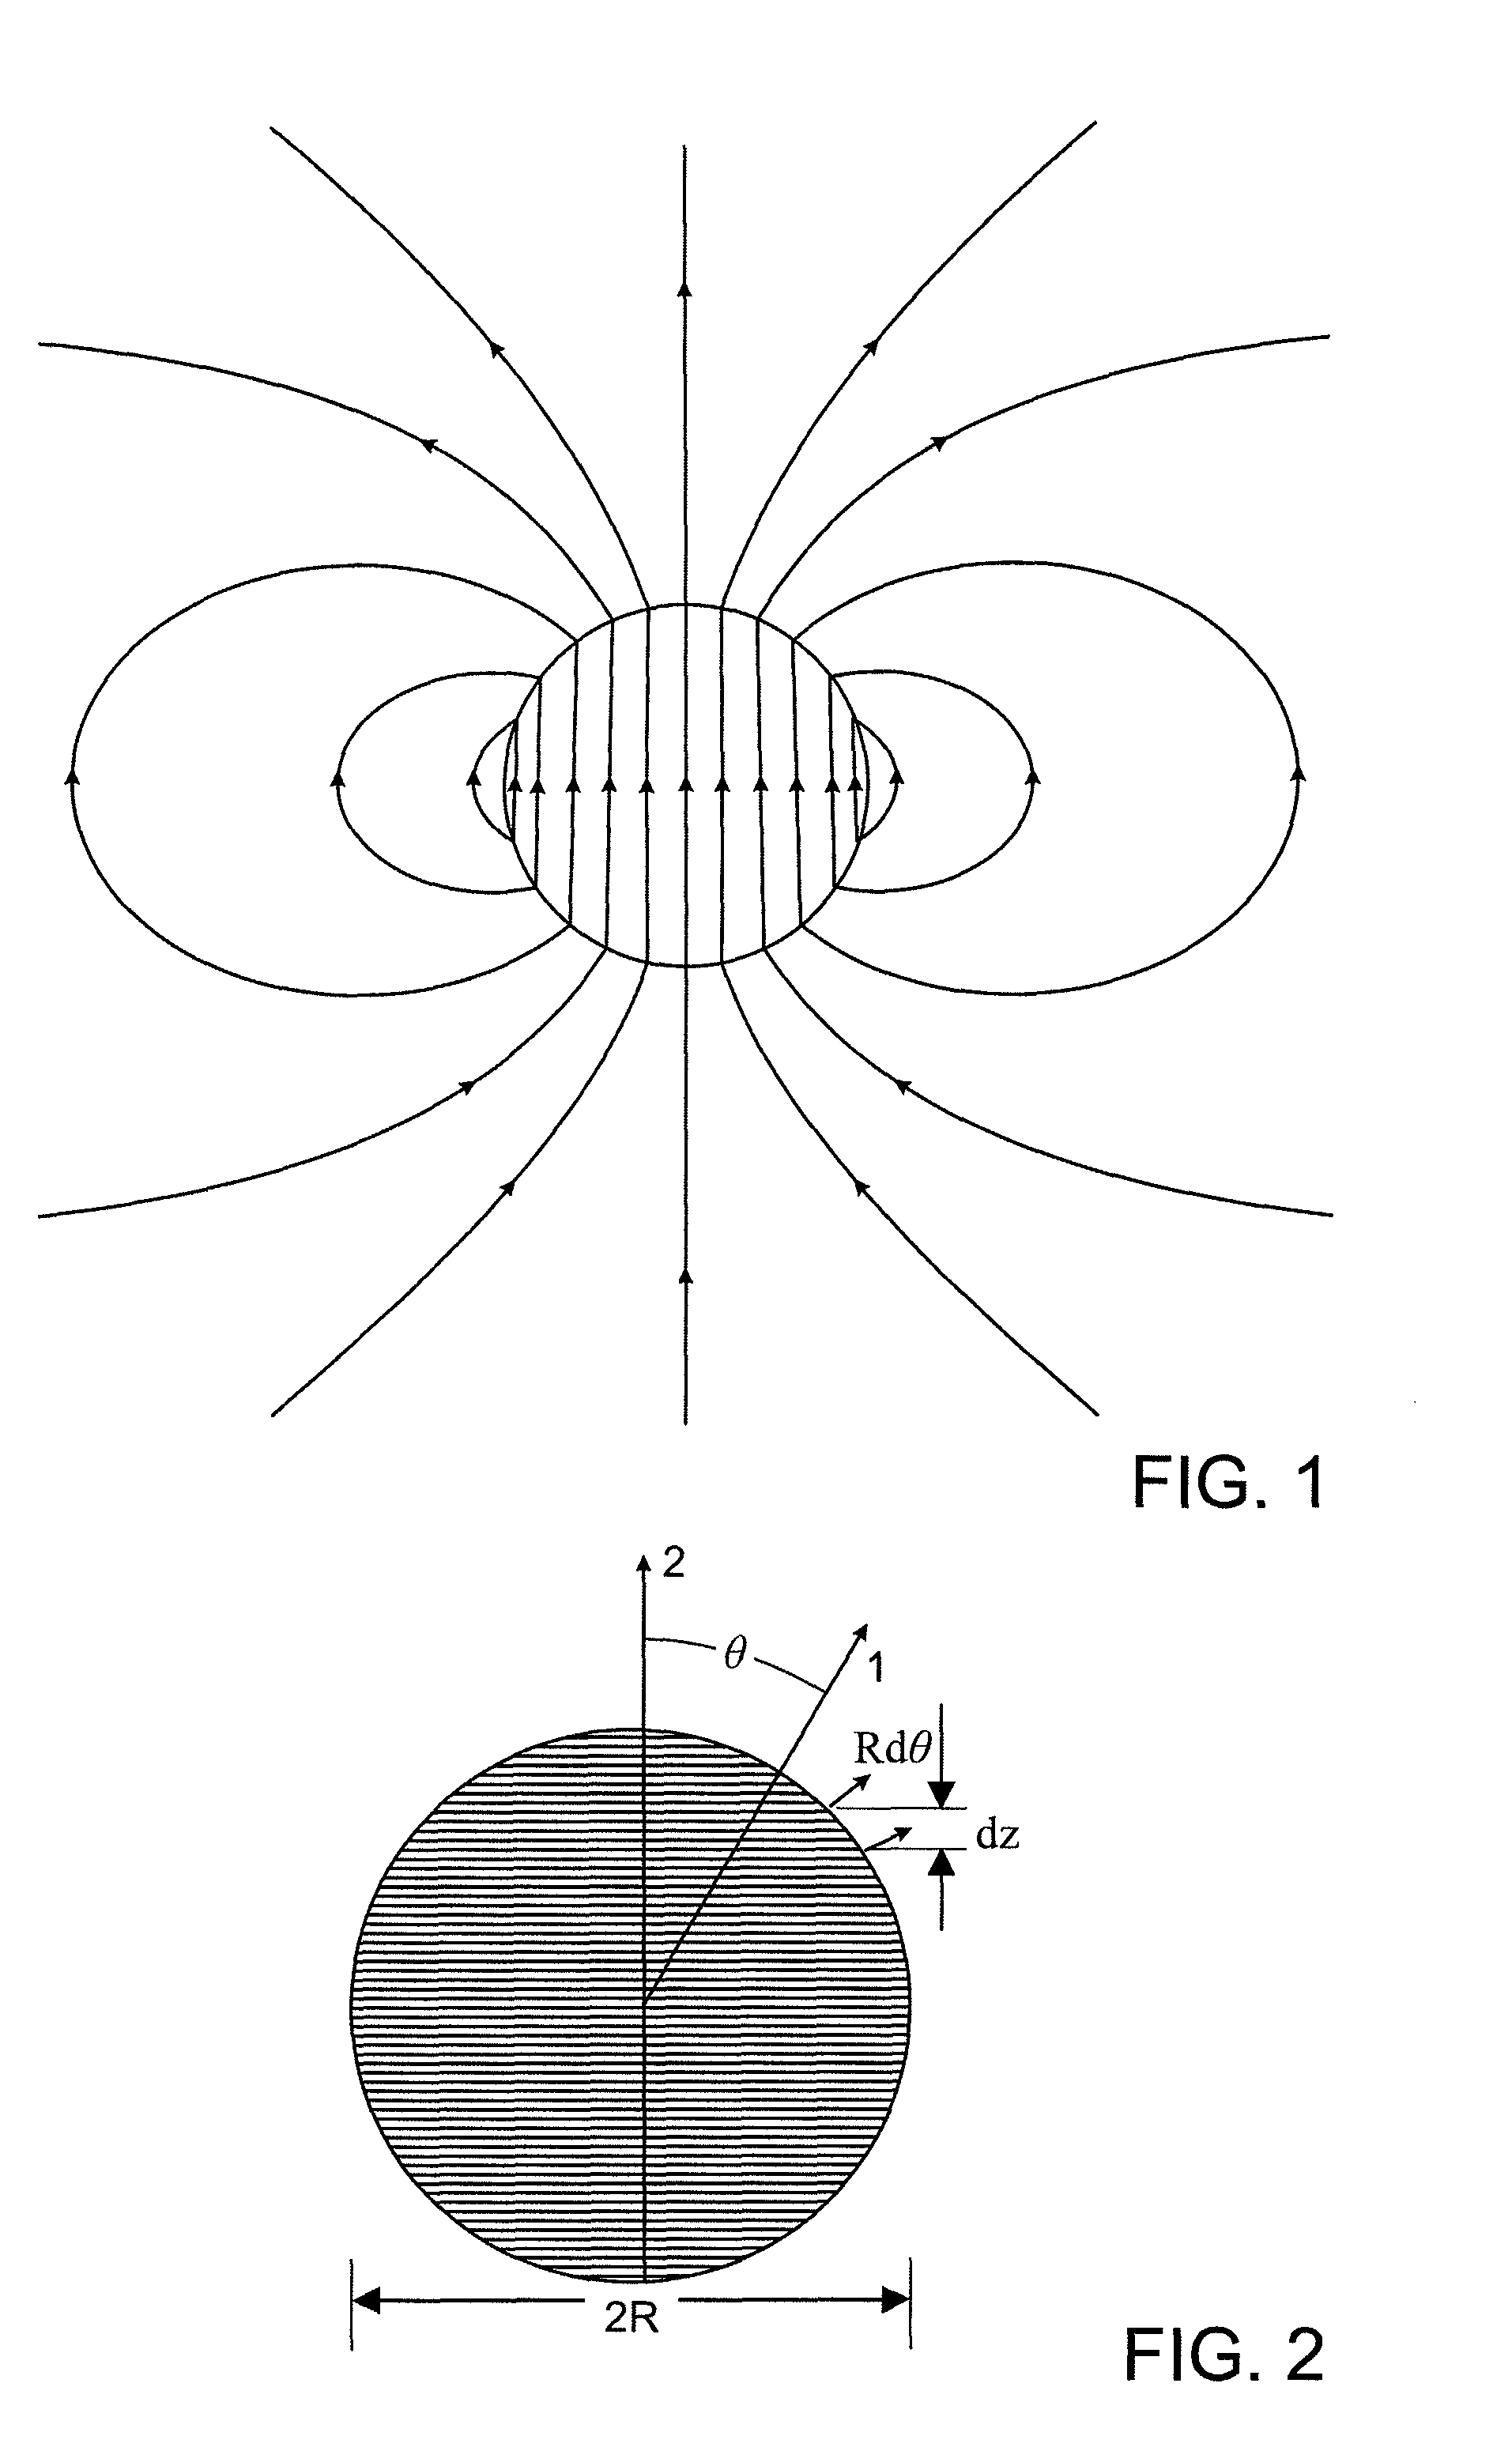 Uniform magnetic field spherical coil for MRI